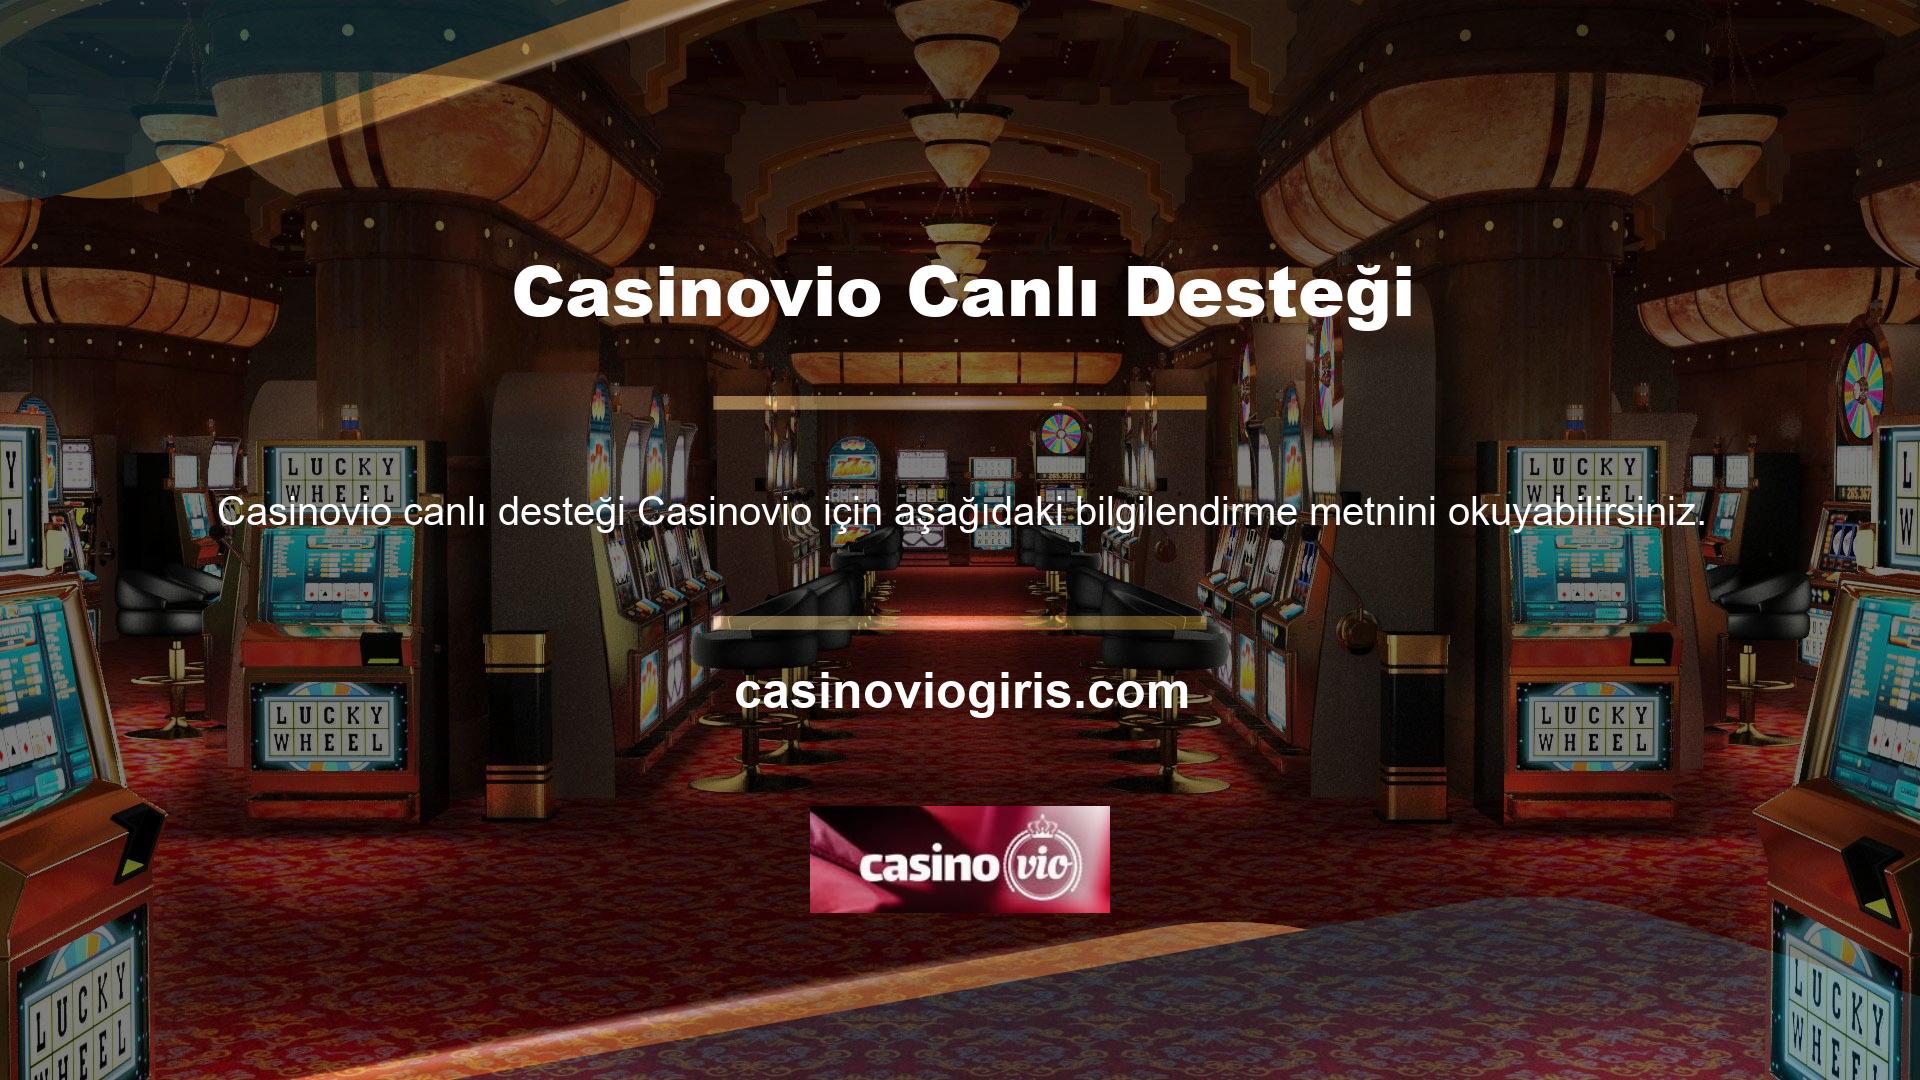 Casinovio canlı desteği 7/24 mevcuttur